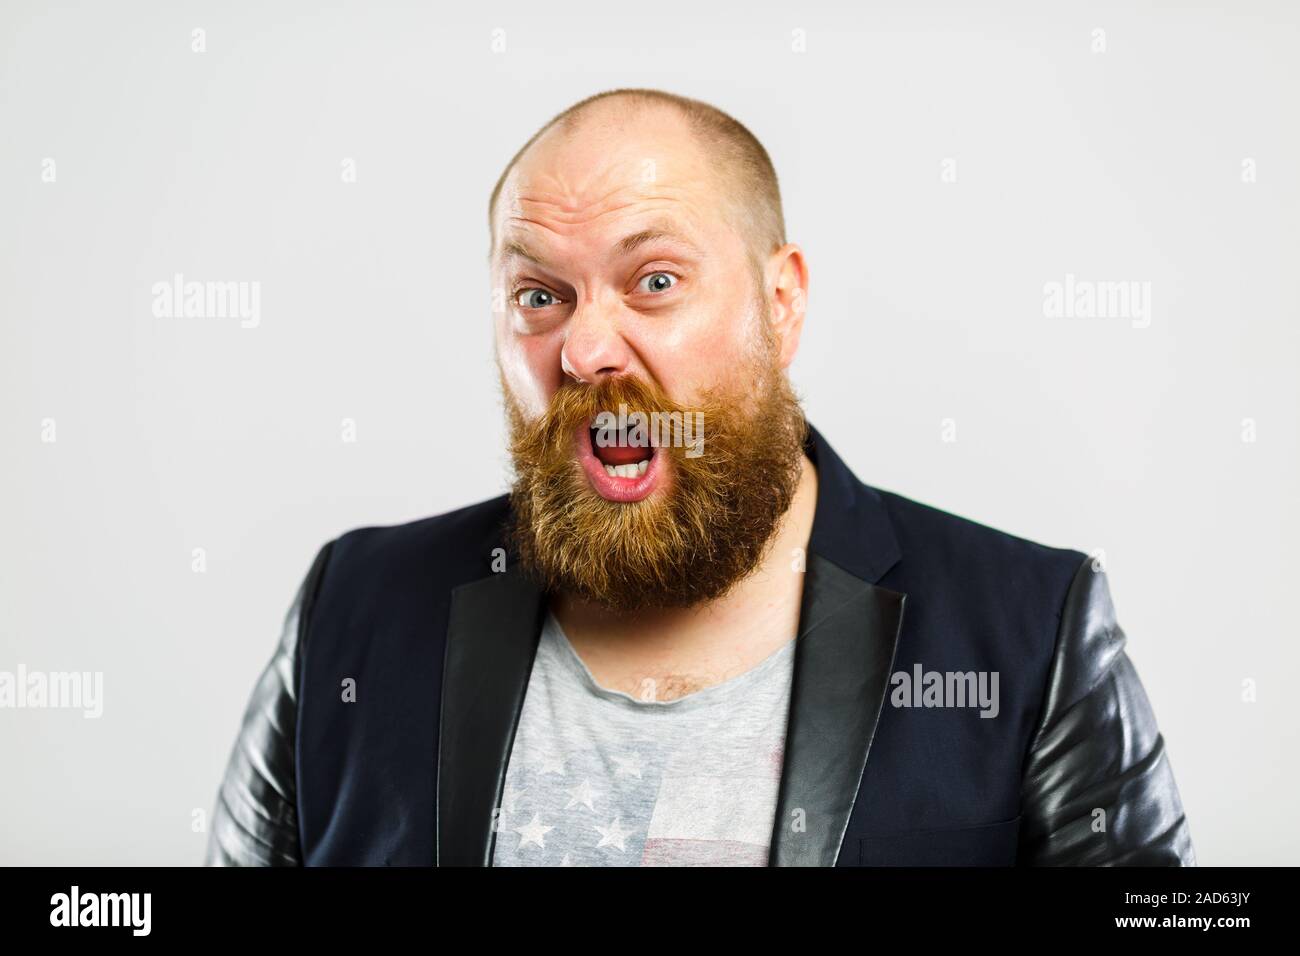 Screaming brutal man with beard Stock Photo